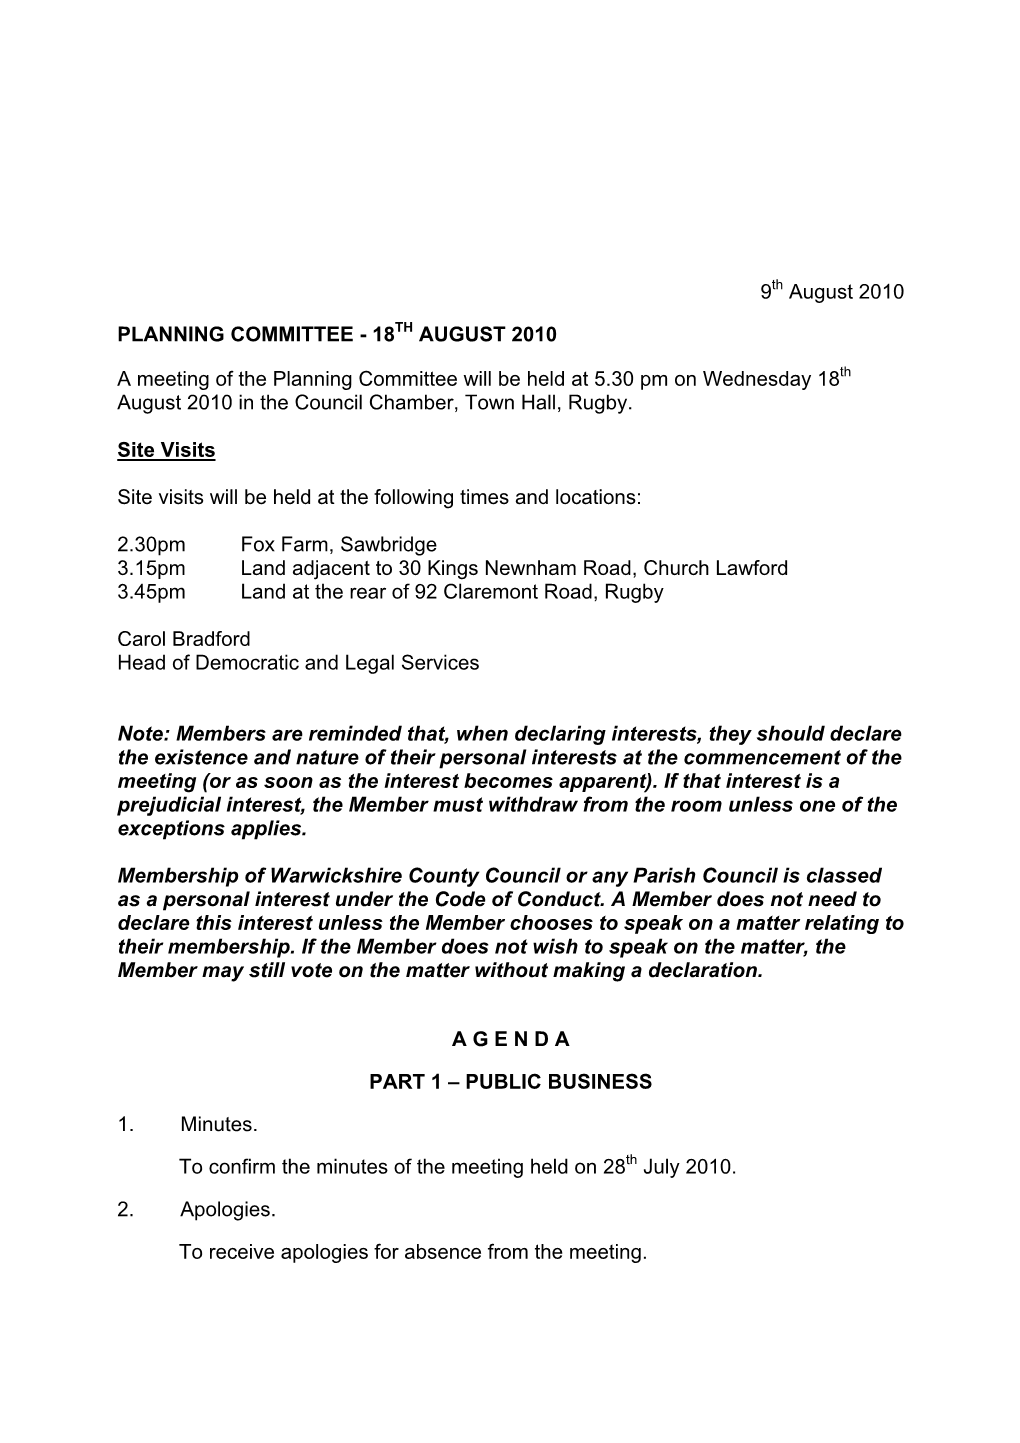 Planning Committee Agenda 18 August 2010